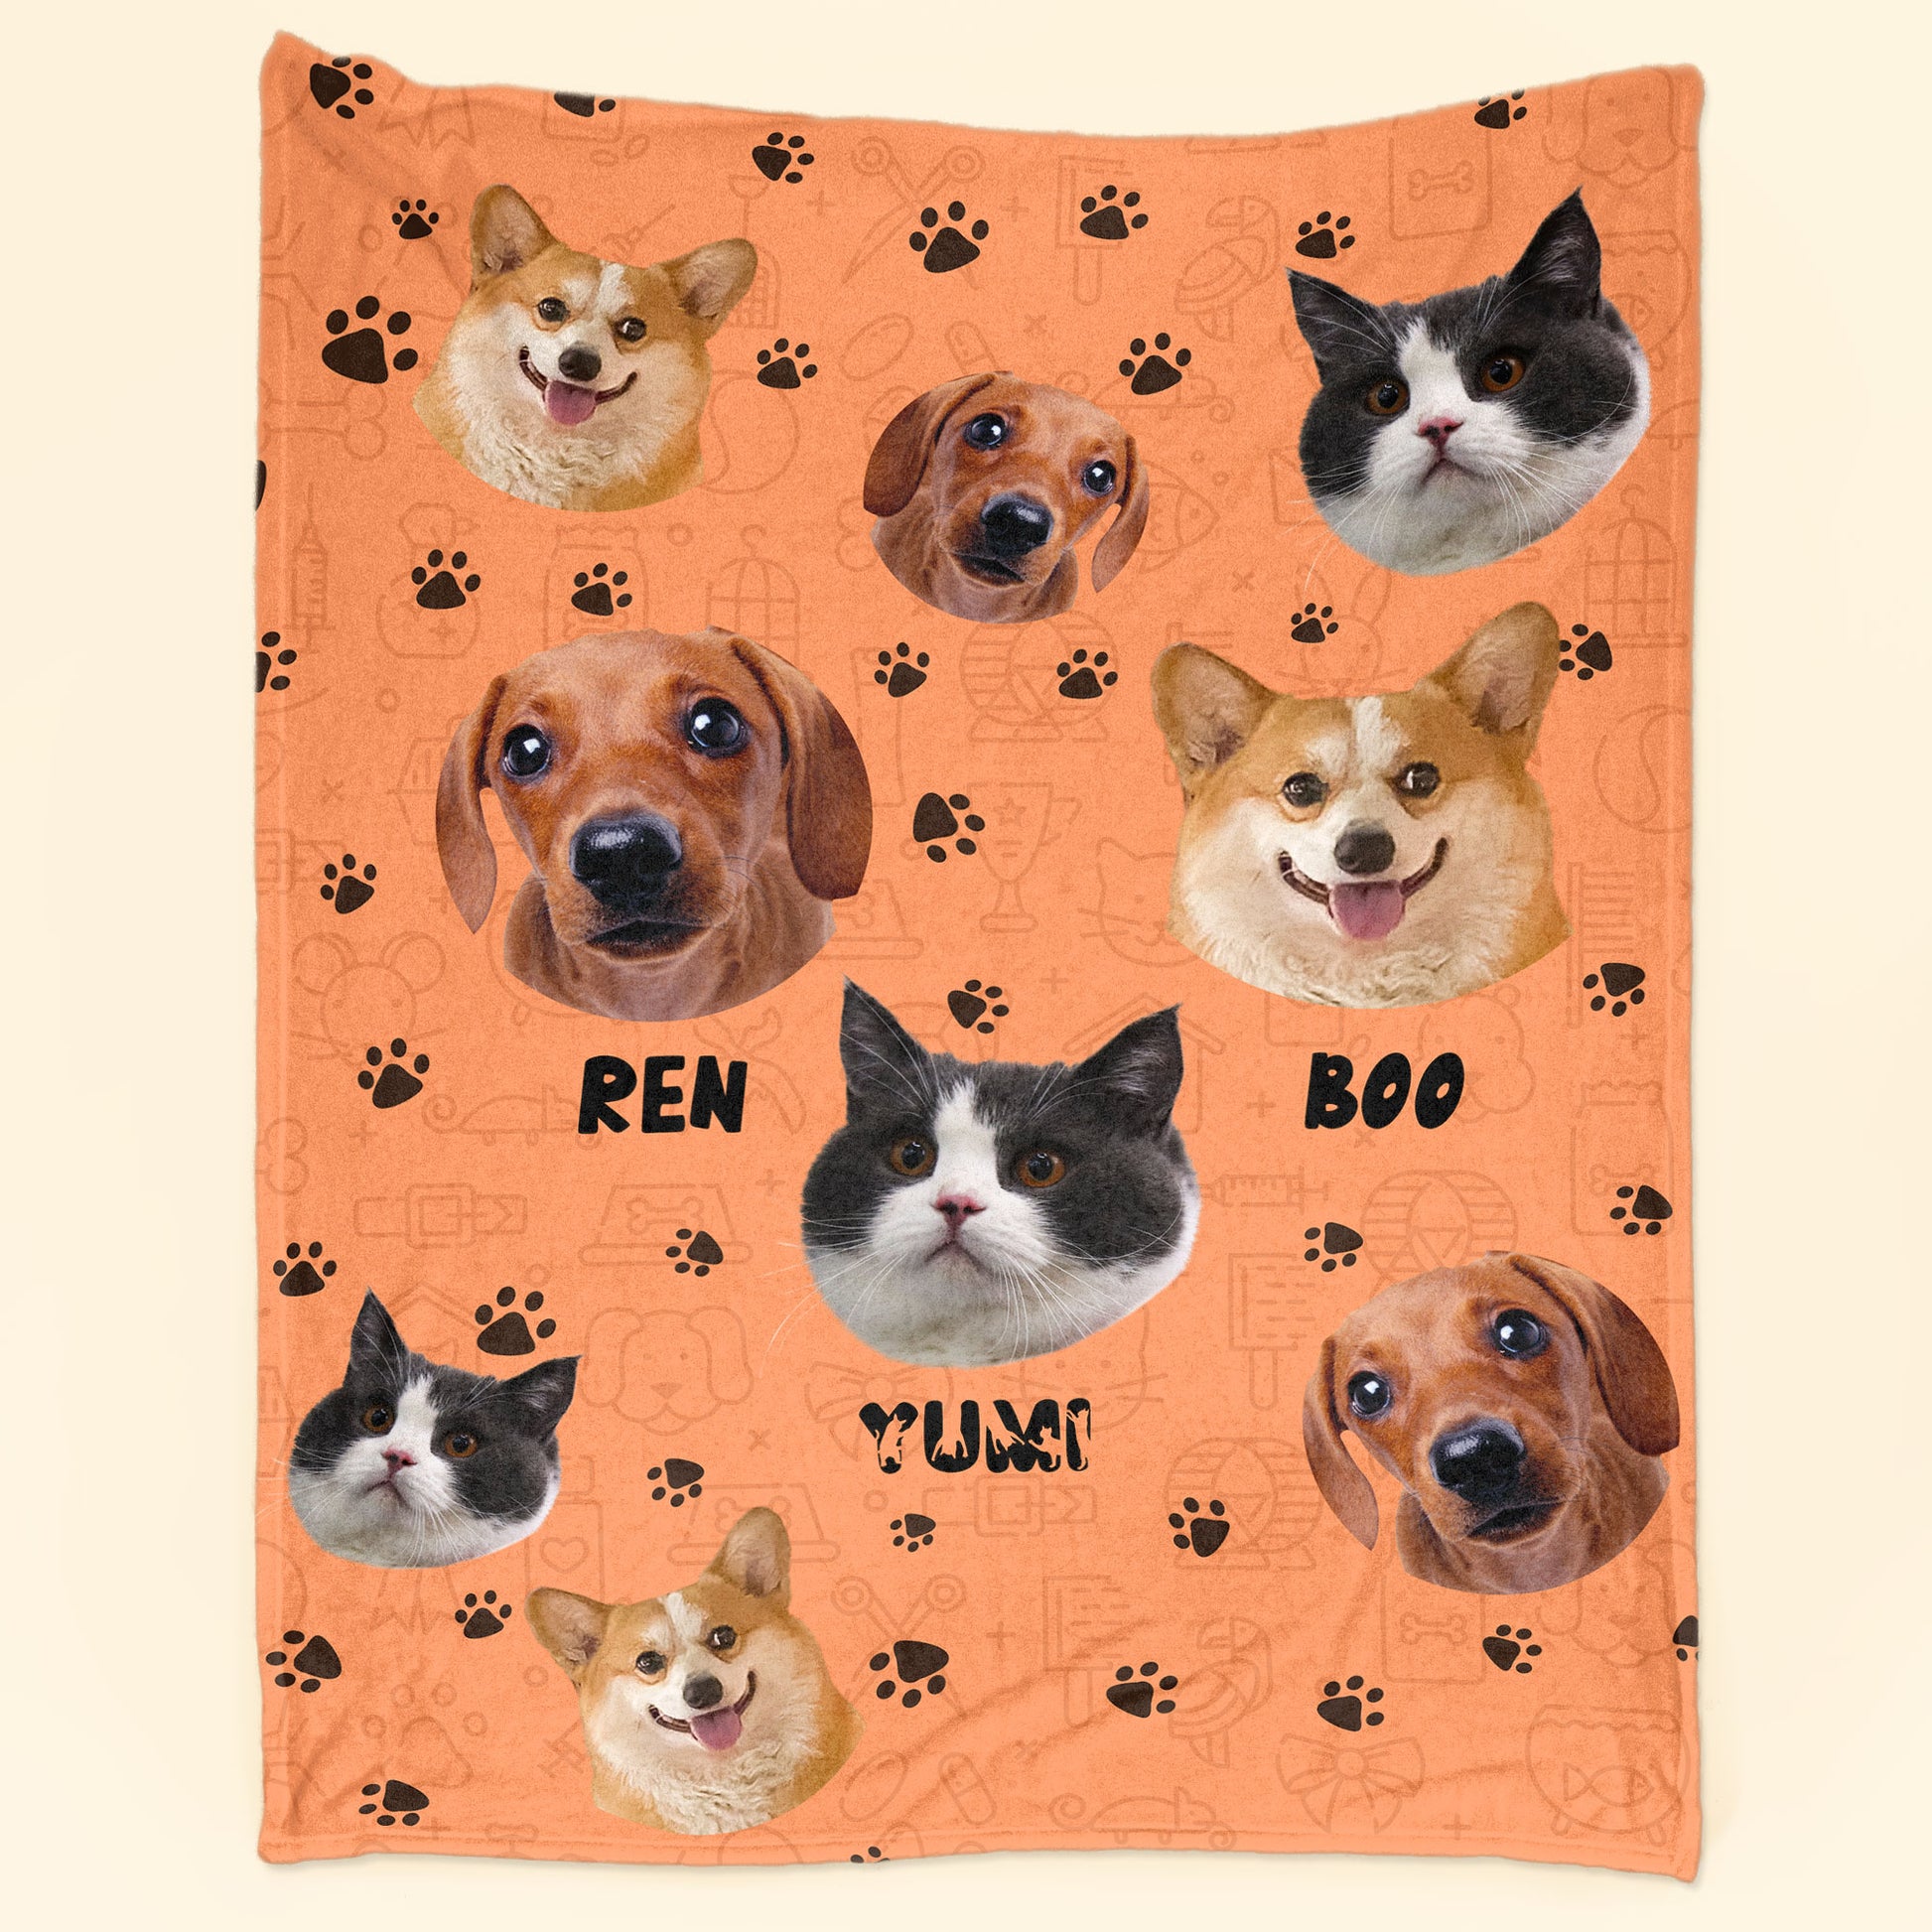 Lovely Upload Pet Image - Personalized Blanket - Birthday, Loving Gift For Cat & Dog Lover, Pet Owner, Pet Parents